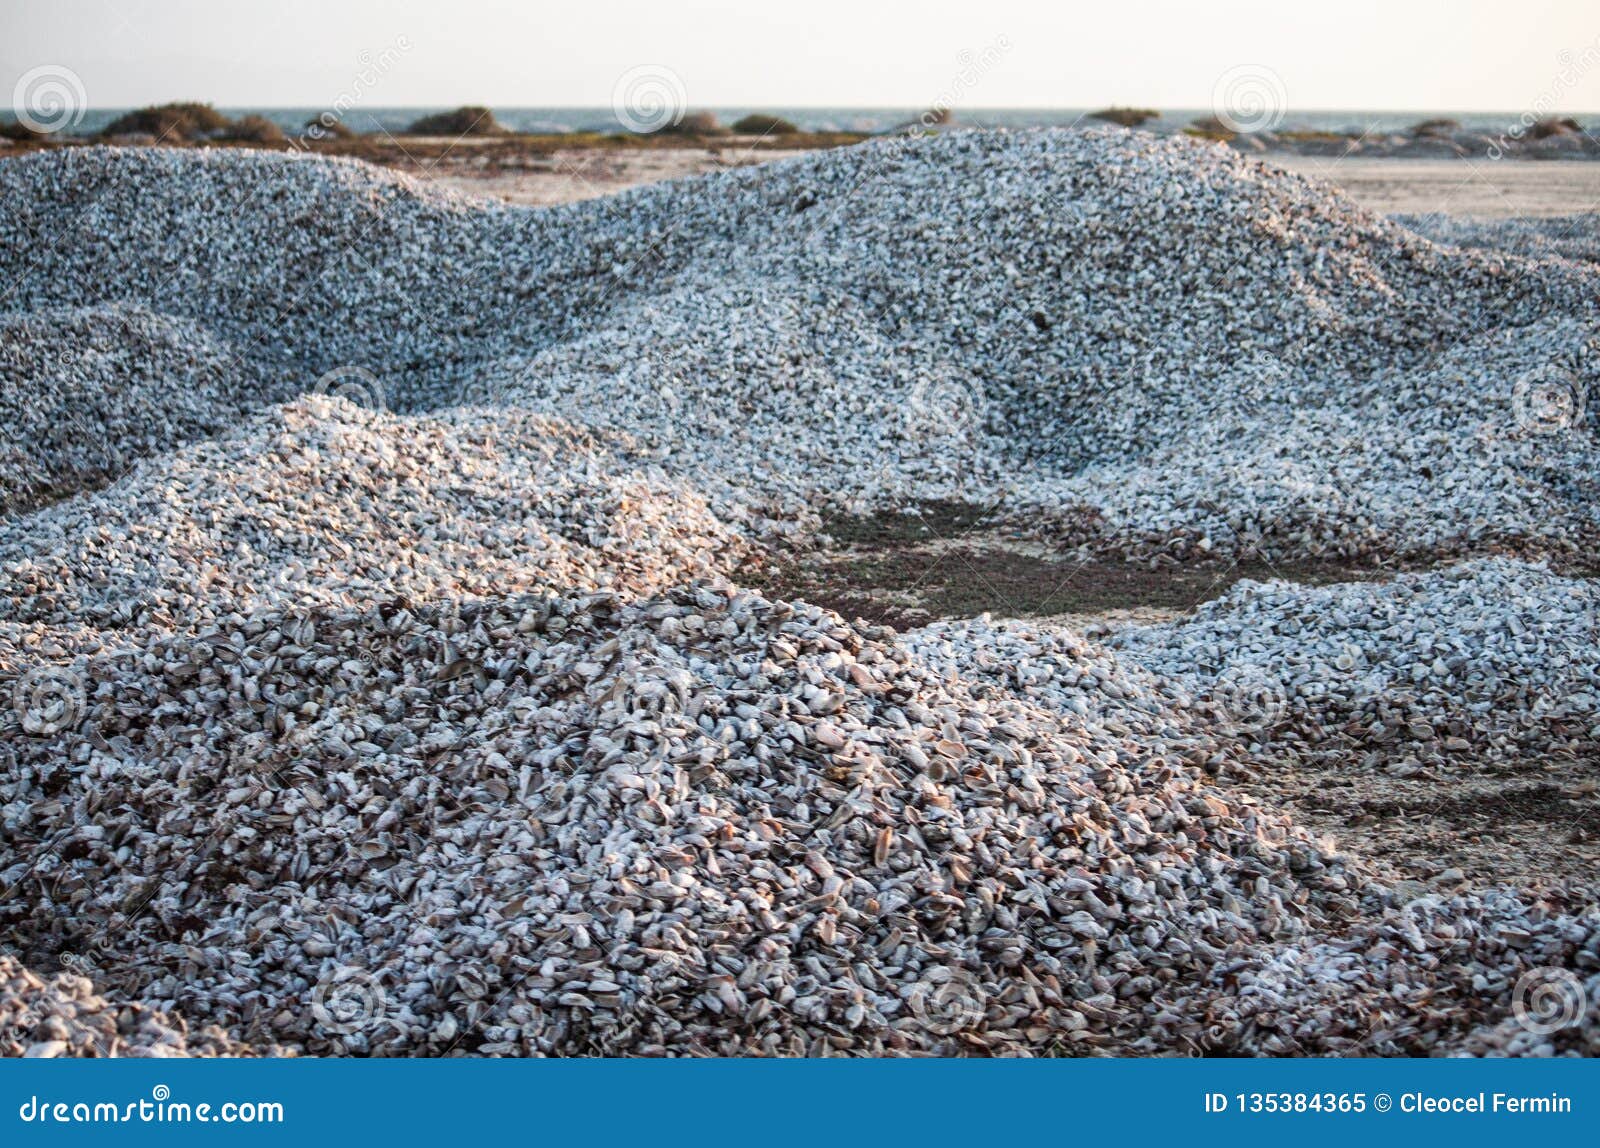 beautiful and natural hill of chipichipi shells in coche margarita island venezuela